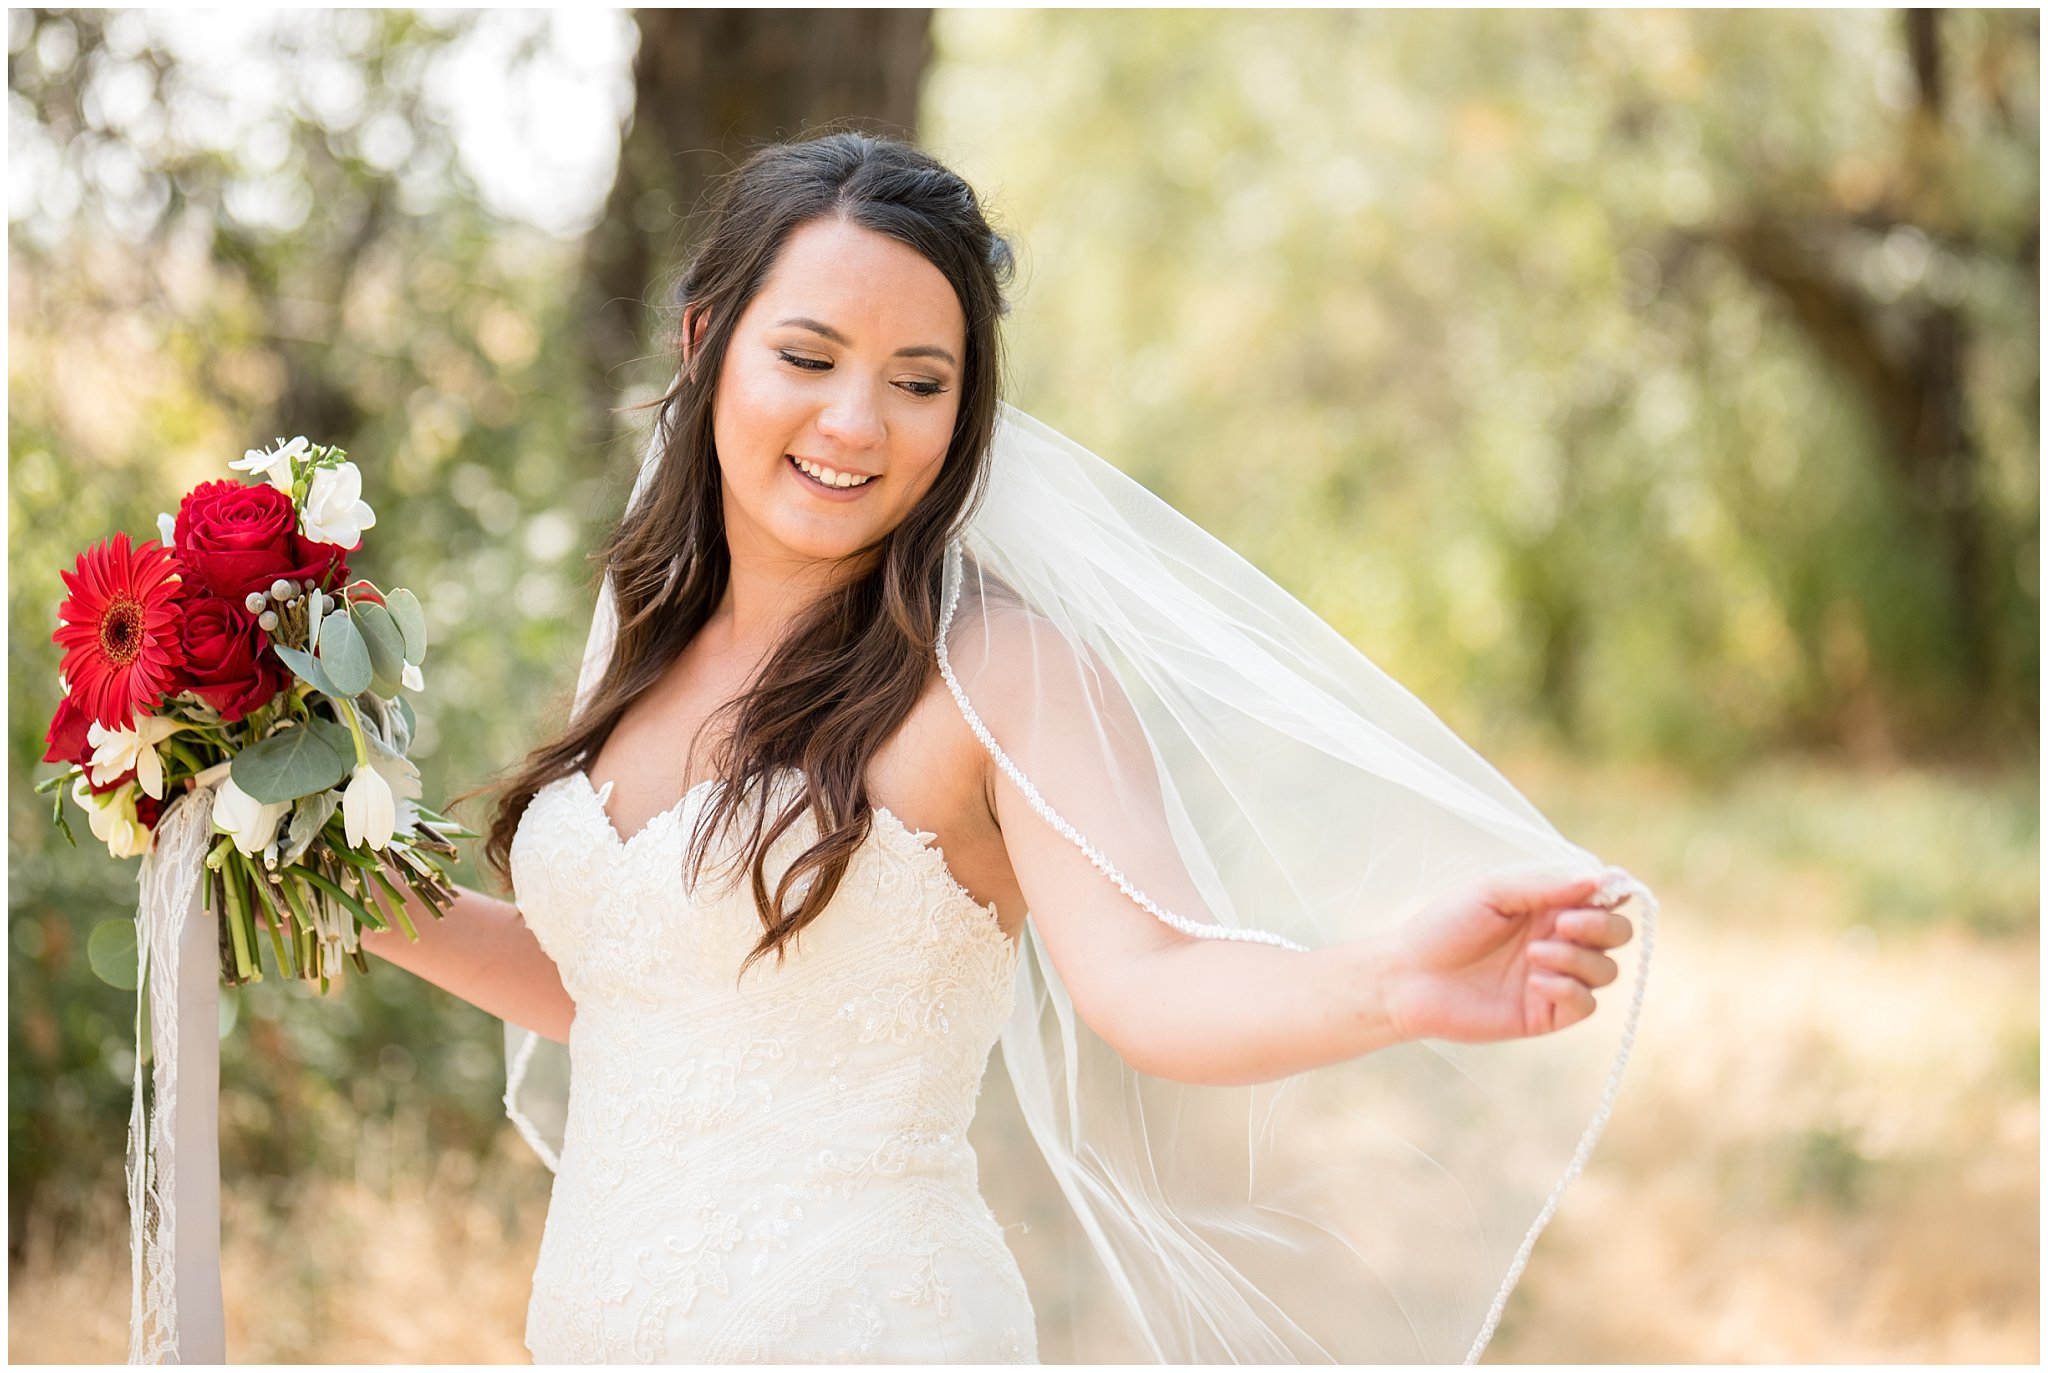 Candid, elegant bridal portrait of bride swooshing her veil | Davis County Outdoor Wedding | Jessie and Dallin Photography